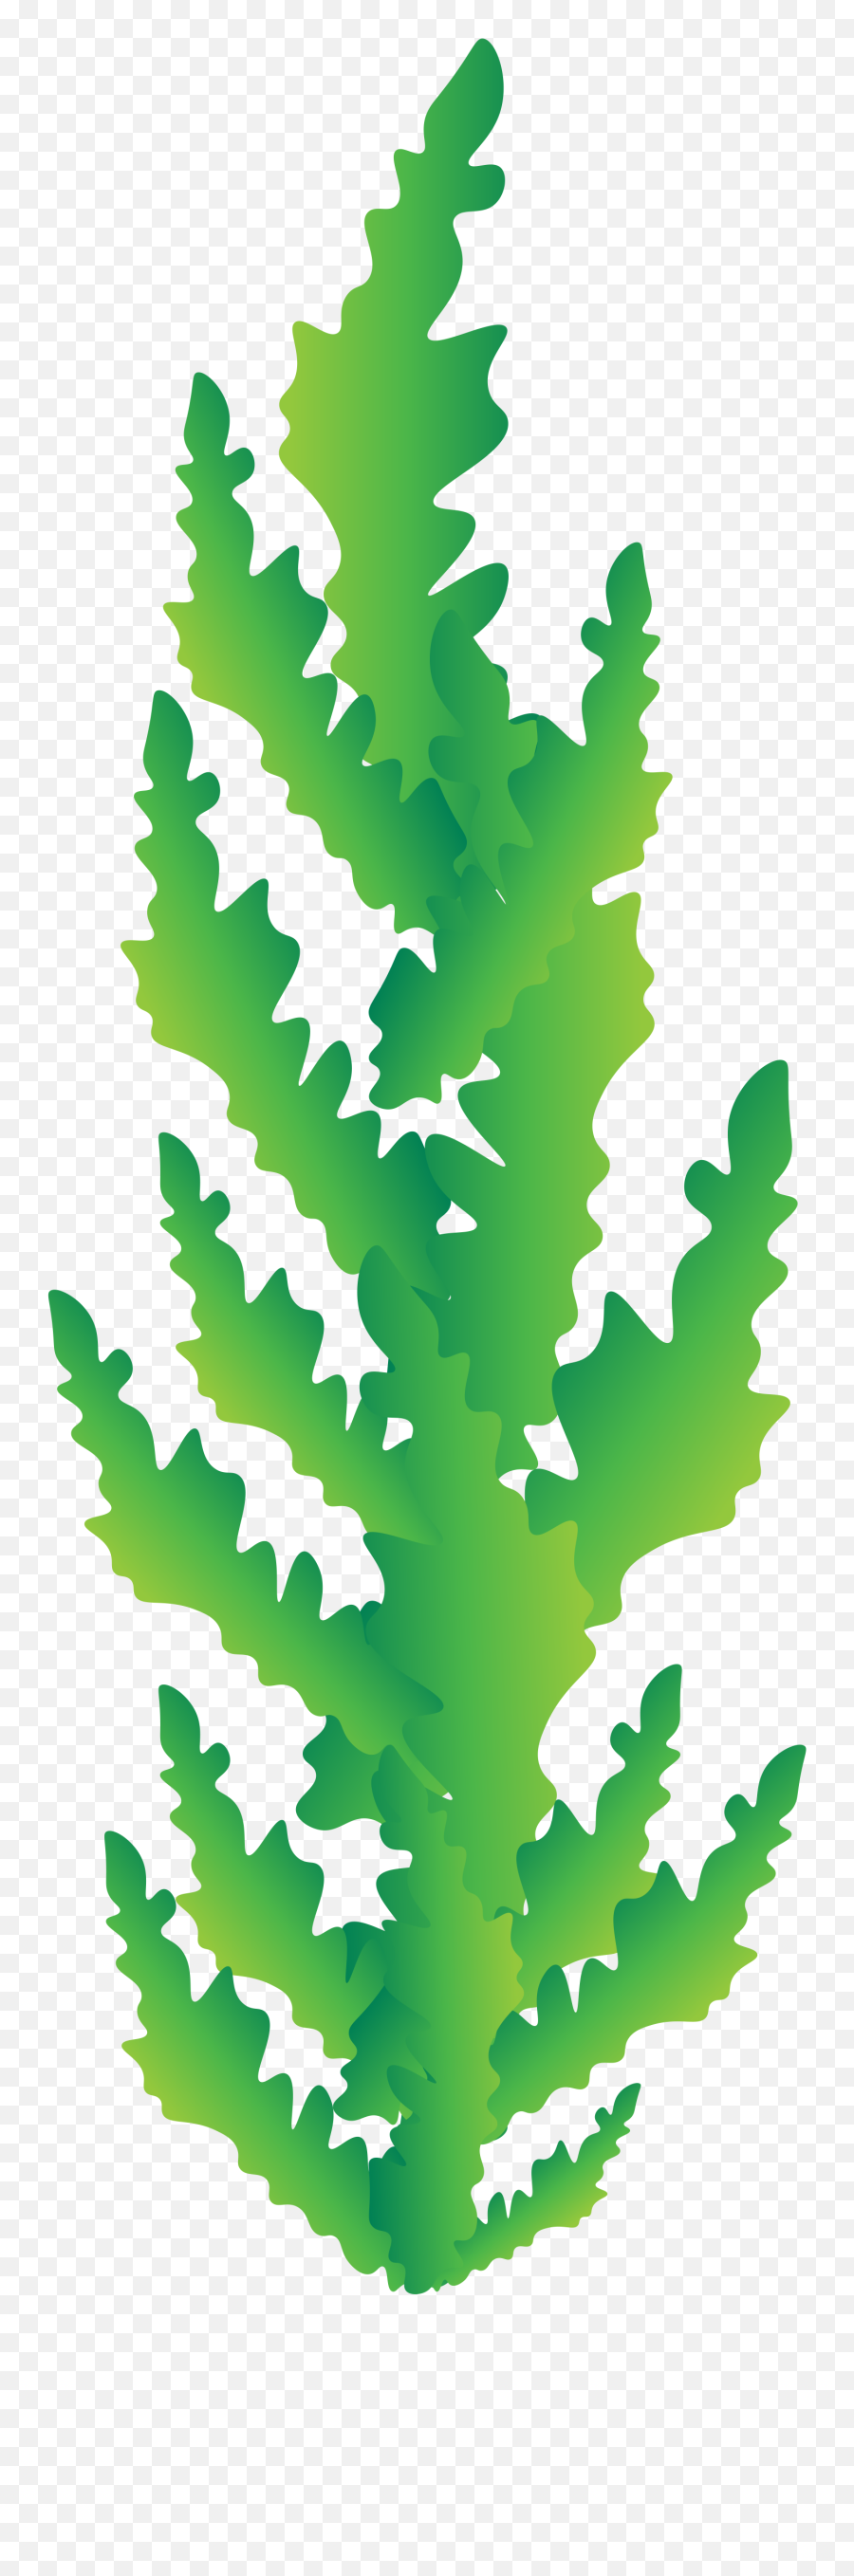 Seaweed Full Size Png Download Seekpng Emoji,Seaweed Transparent Background